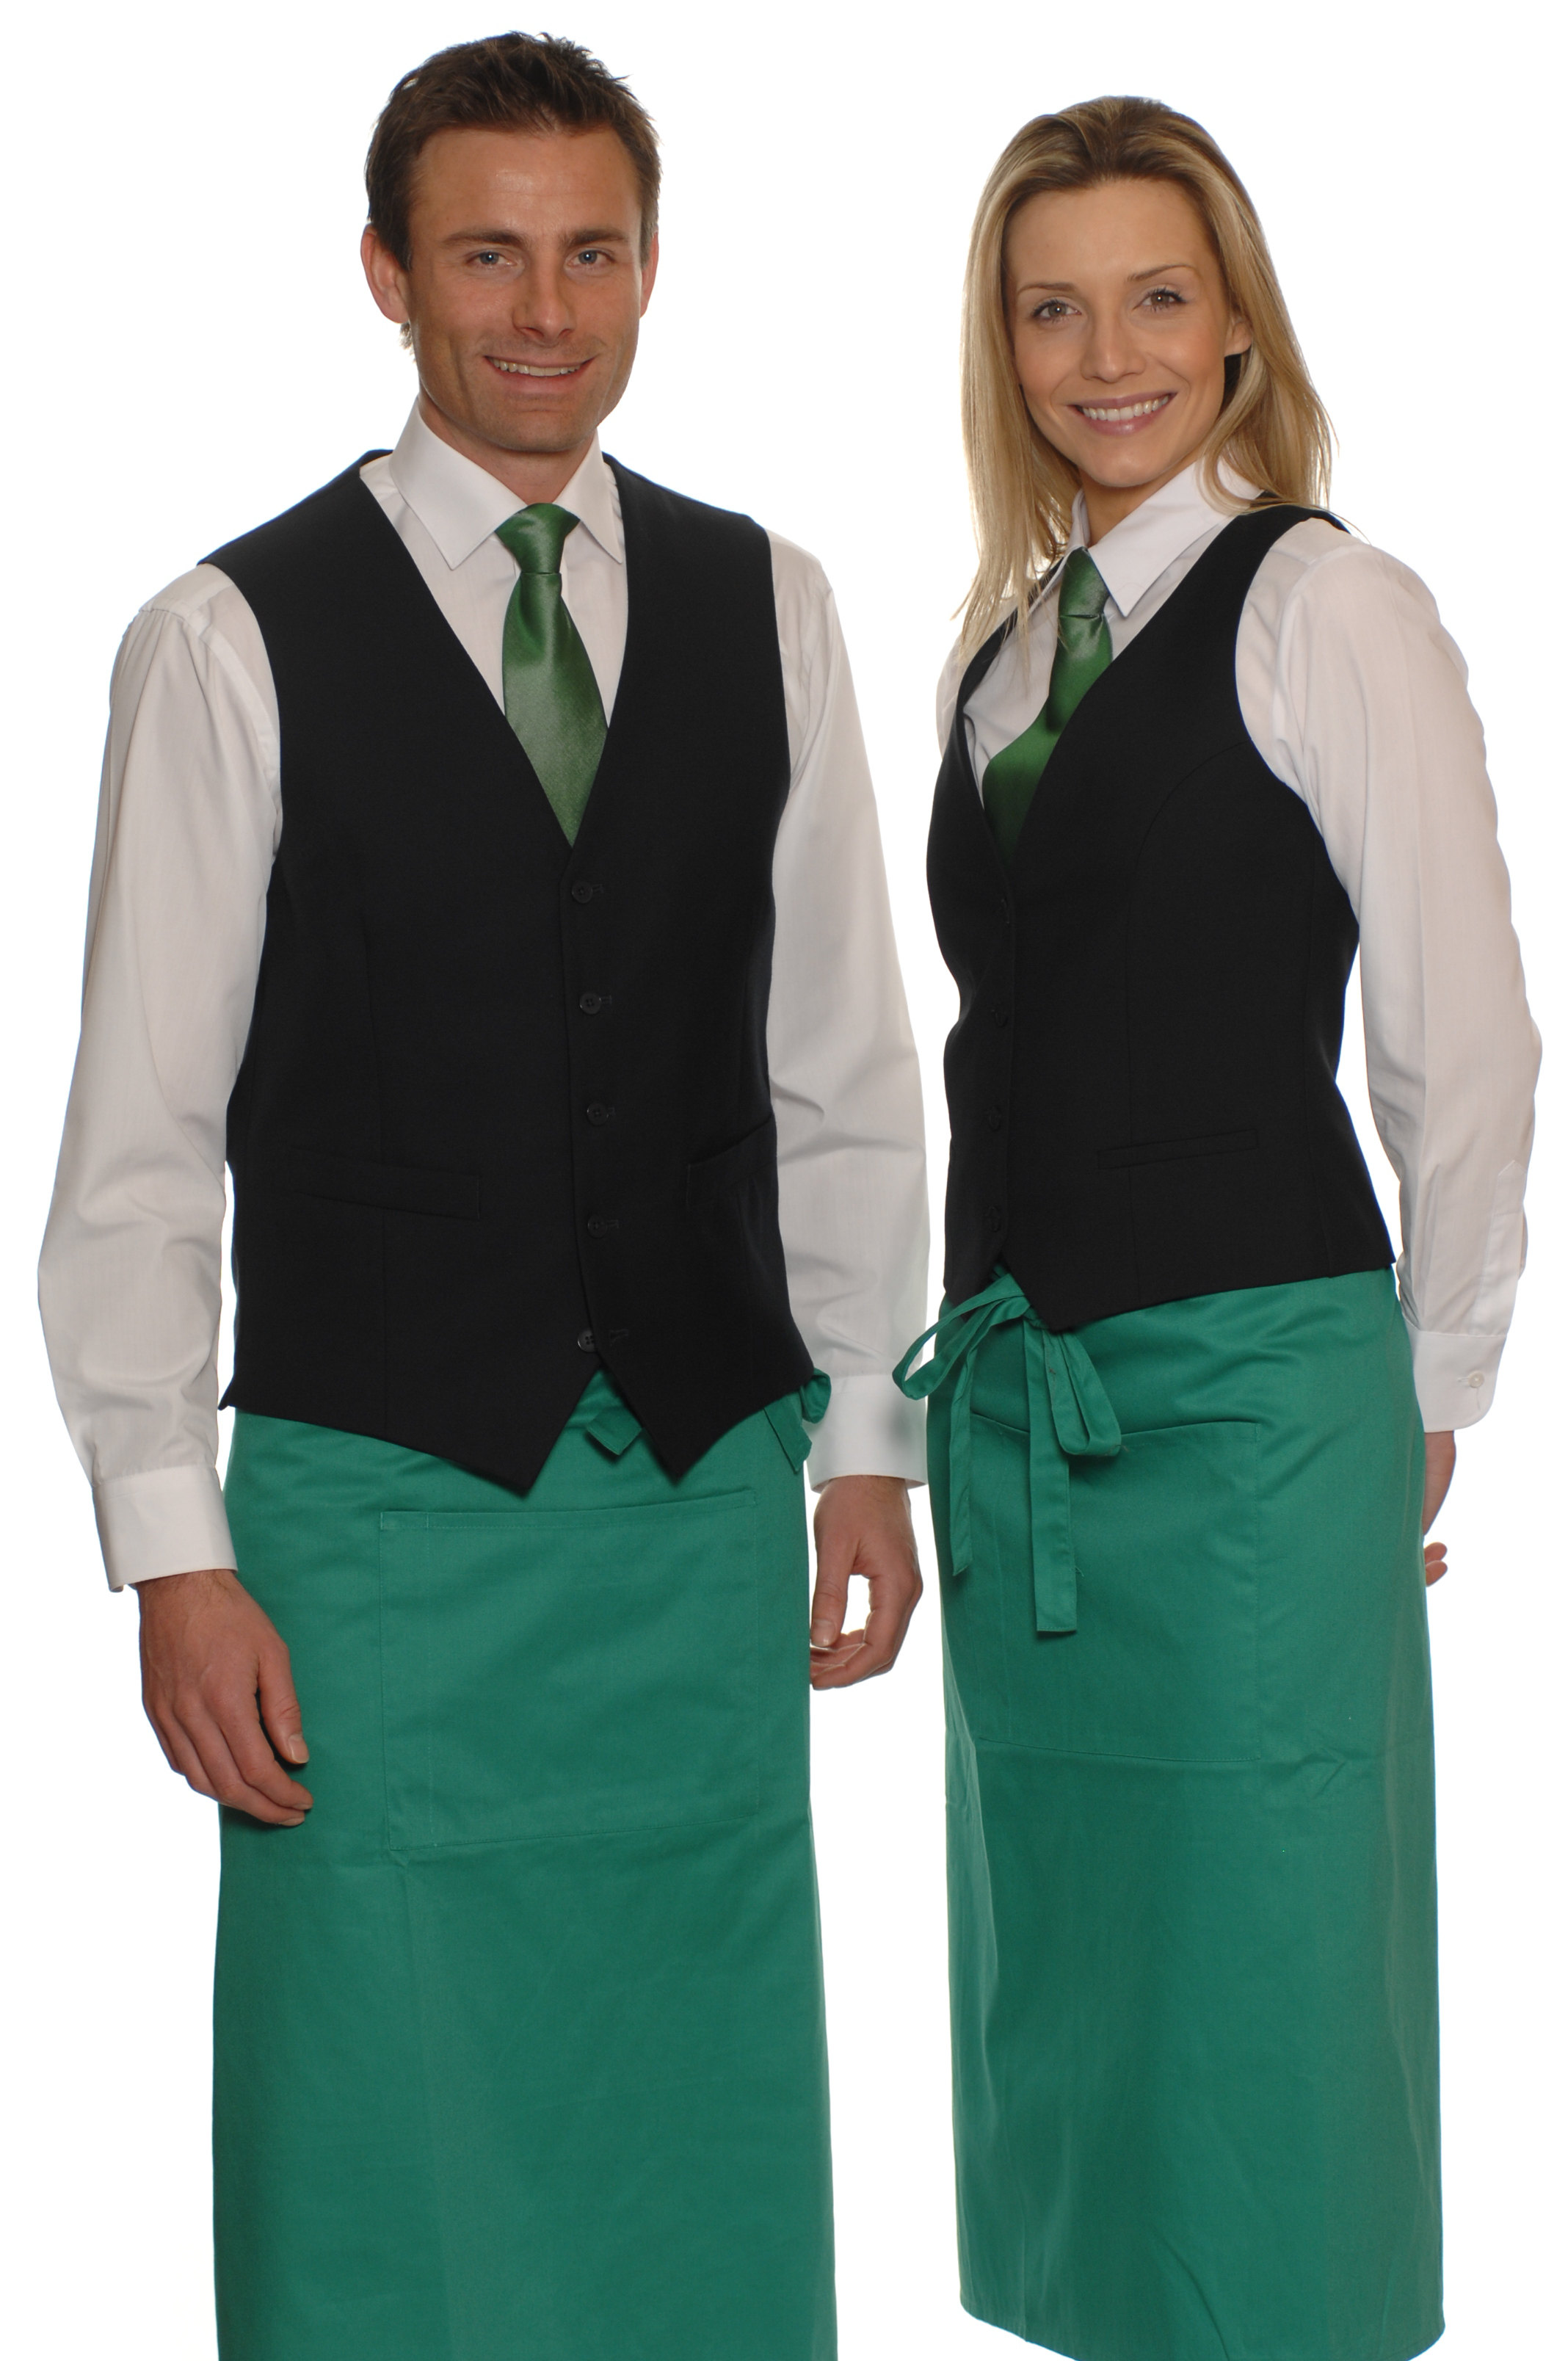 Waiter and waitress in uniform